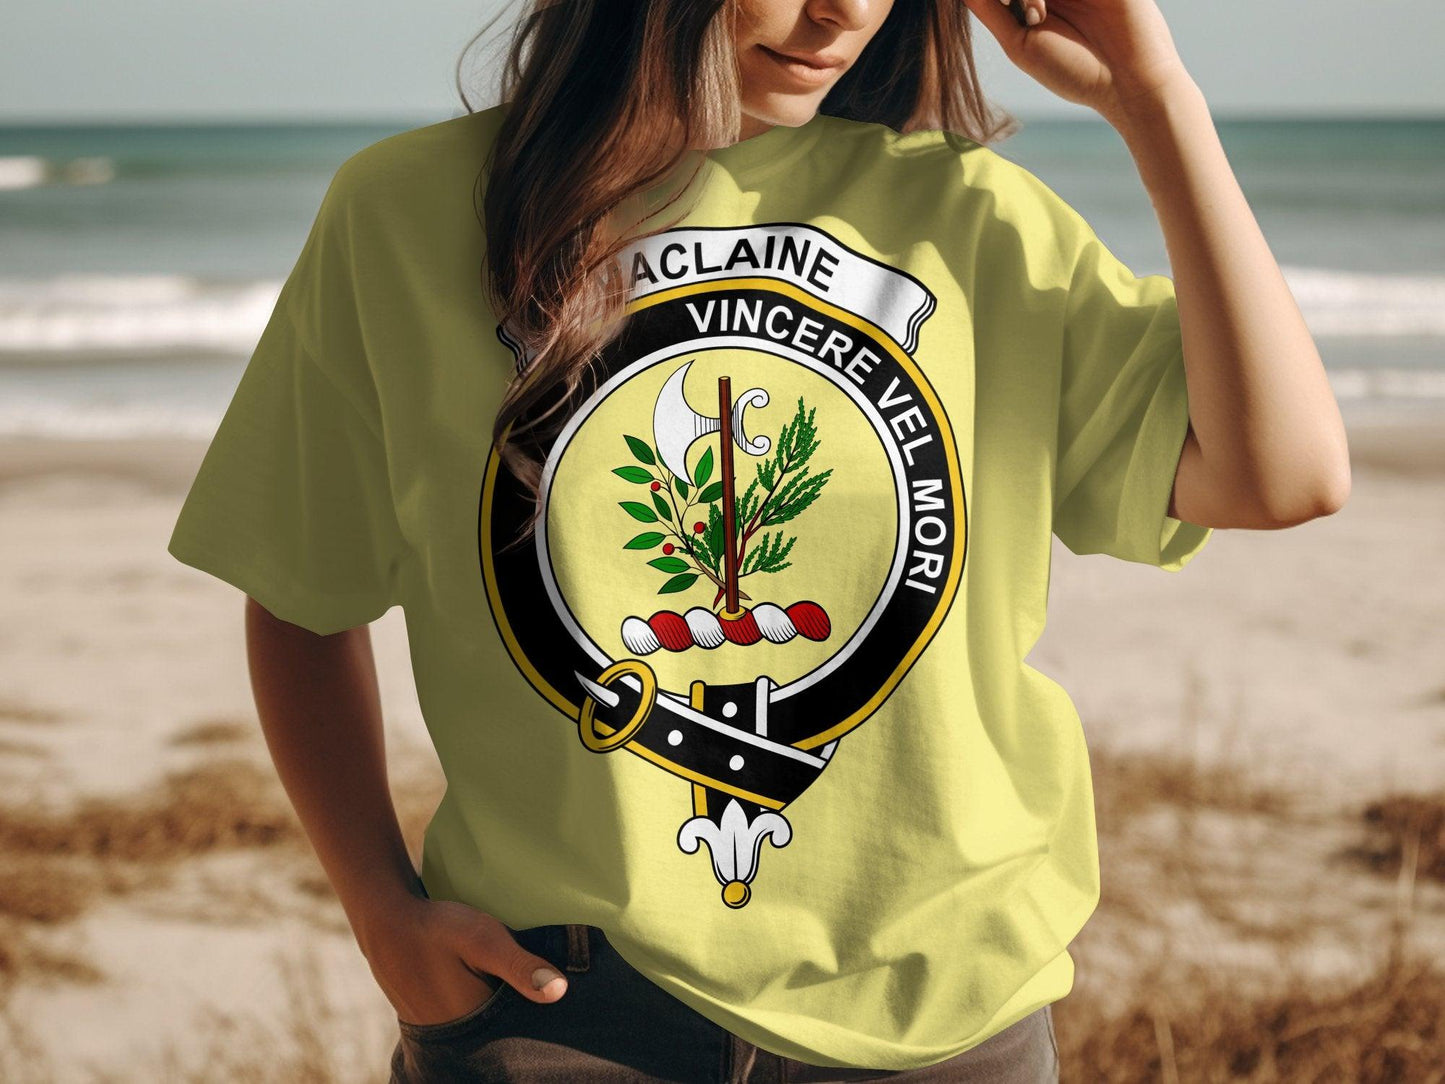 Maclaine Scottish Clan Crest Highland Games T-Shirt - Living Stone Gifts